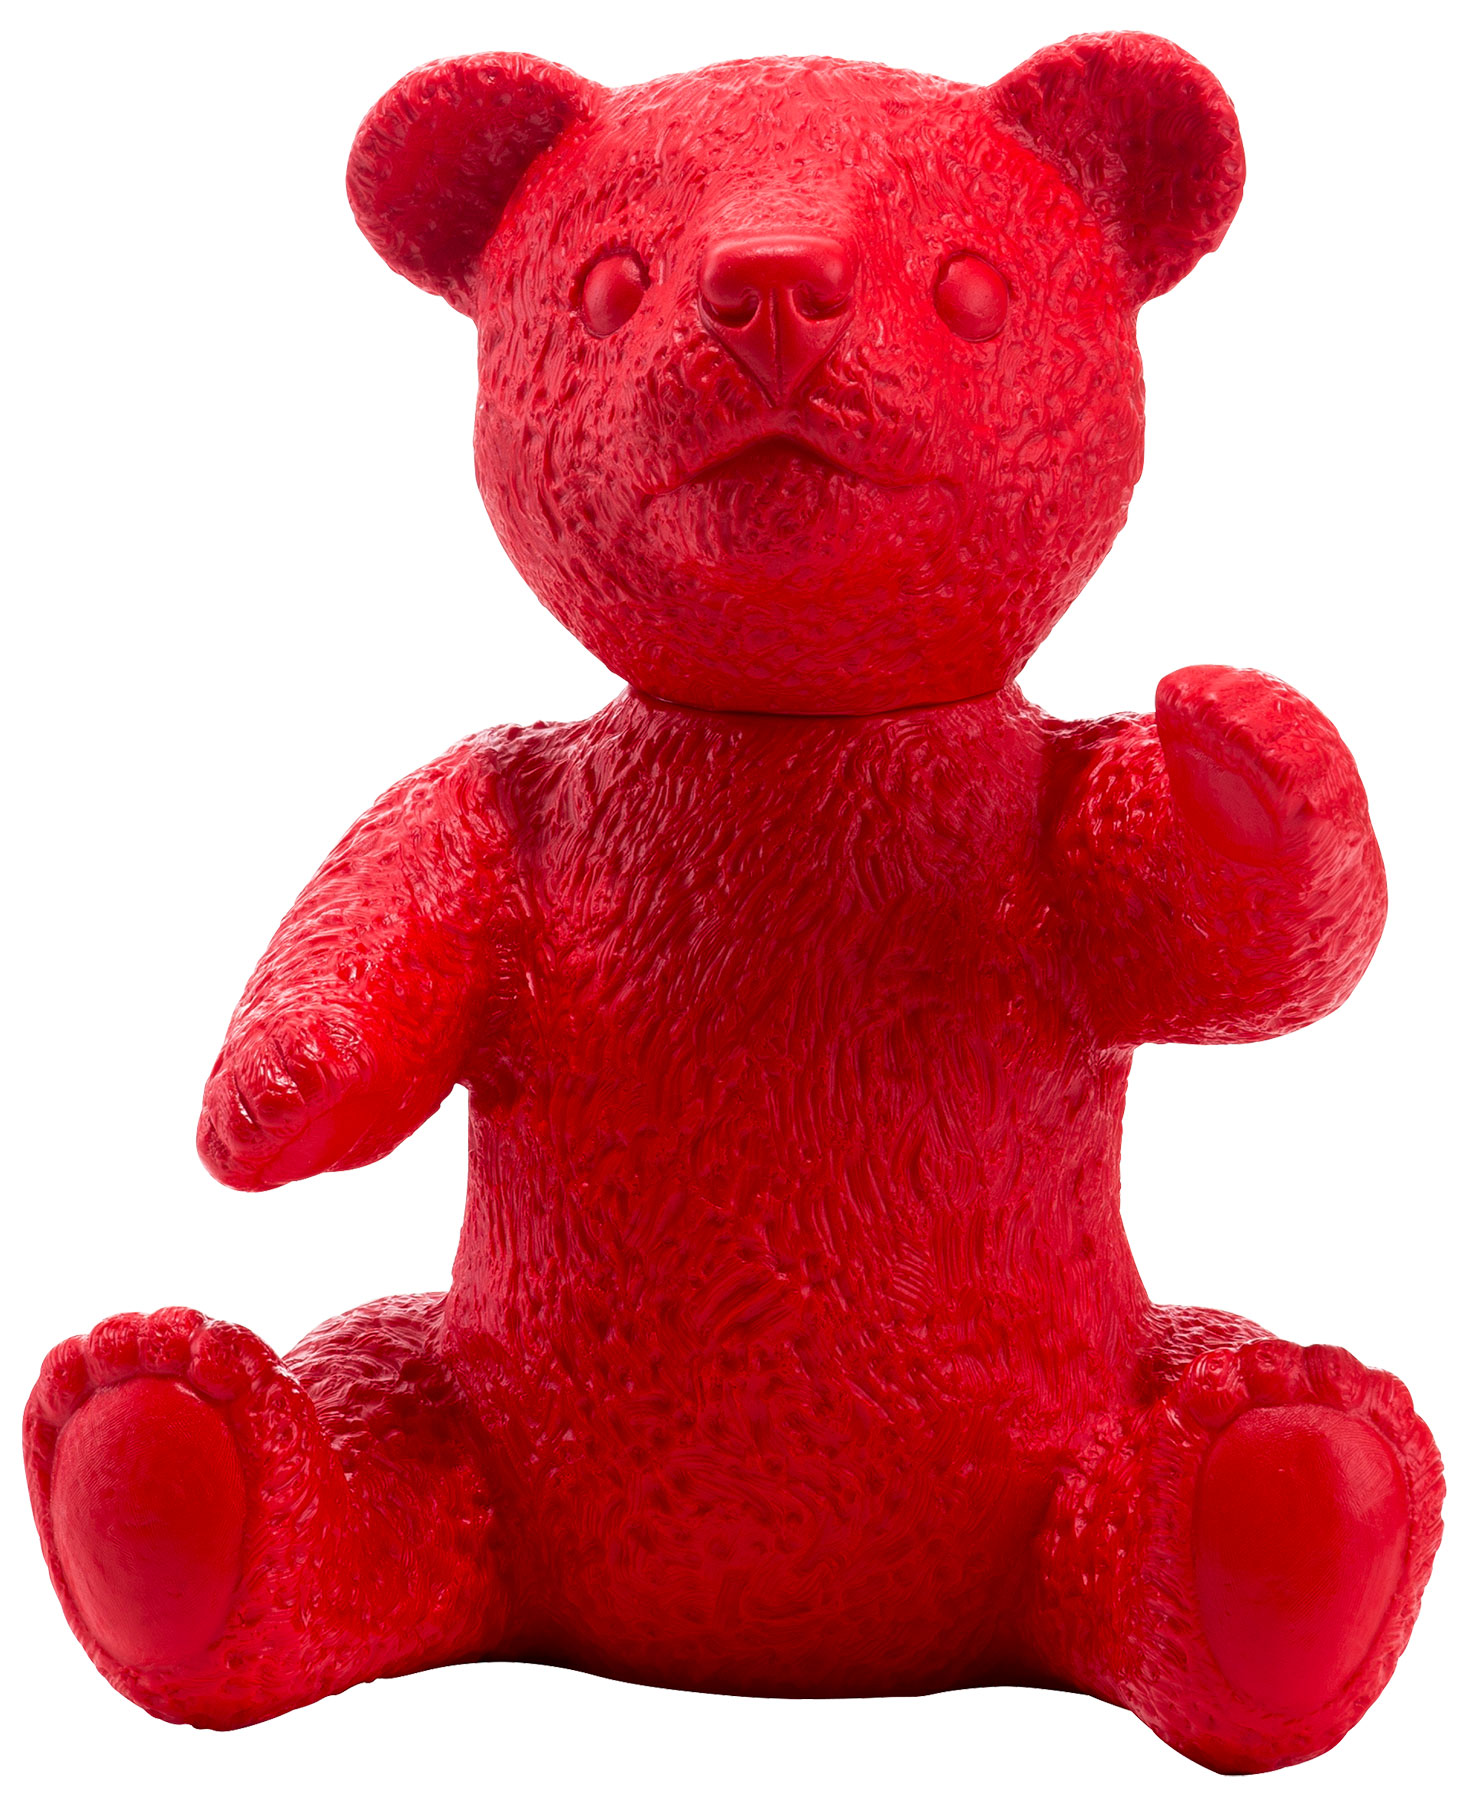 Ottmar Hörl: Skulptur 'Teddy rot' (2007), unsignierte Version